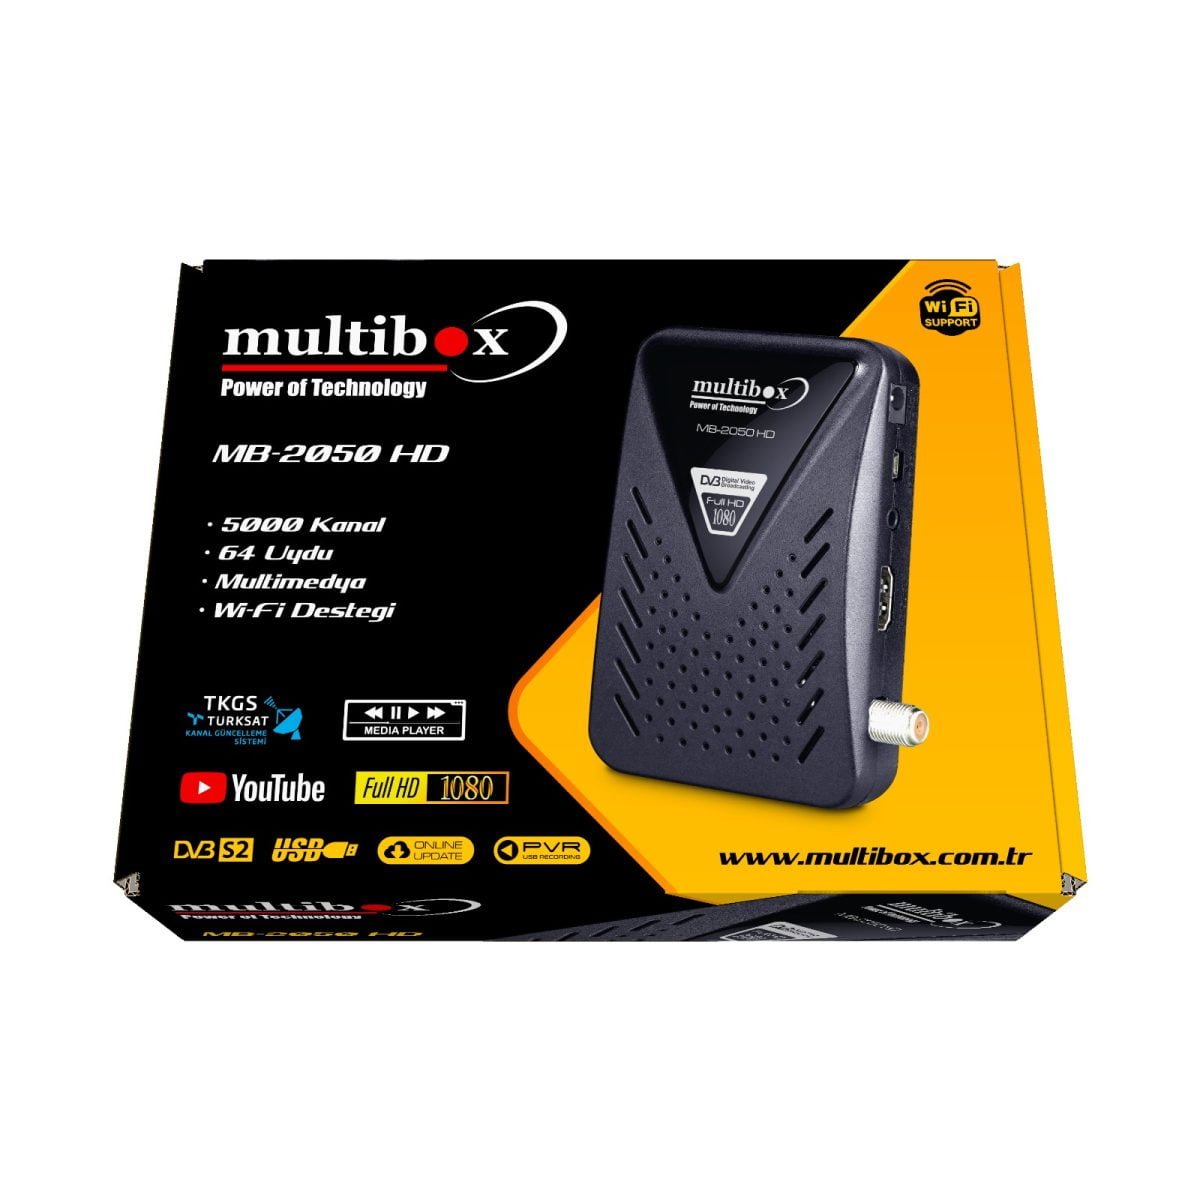 Multibox MB-2060 HD